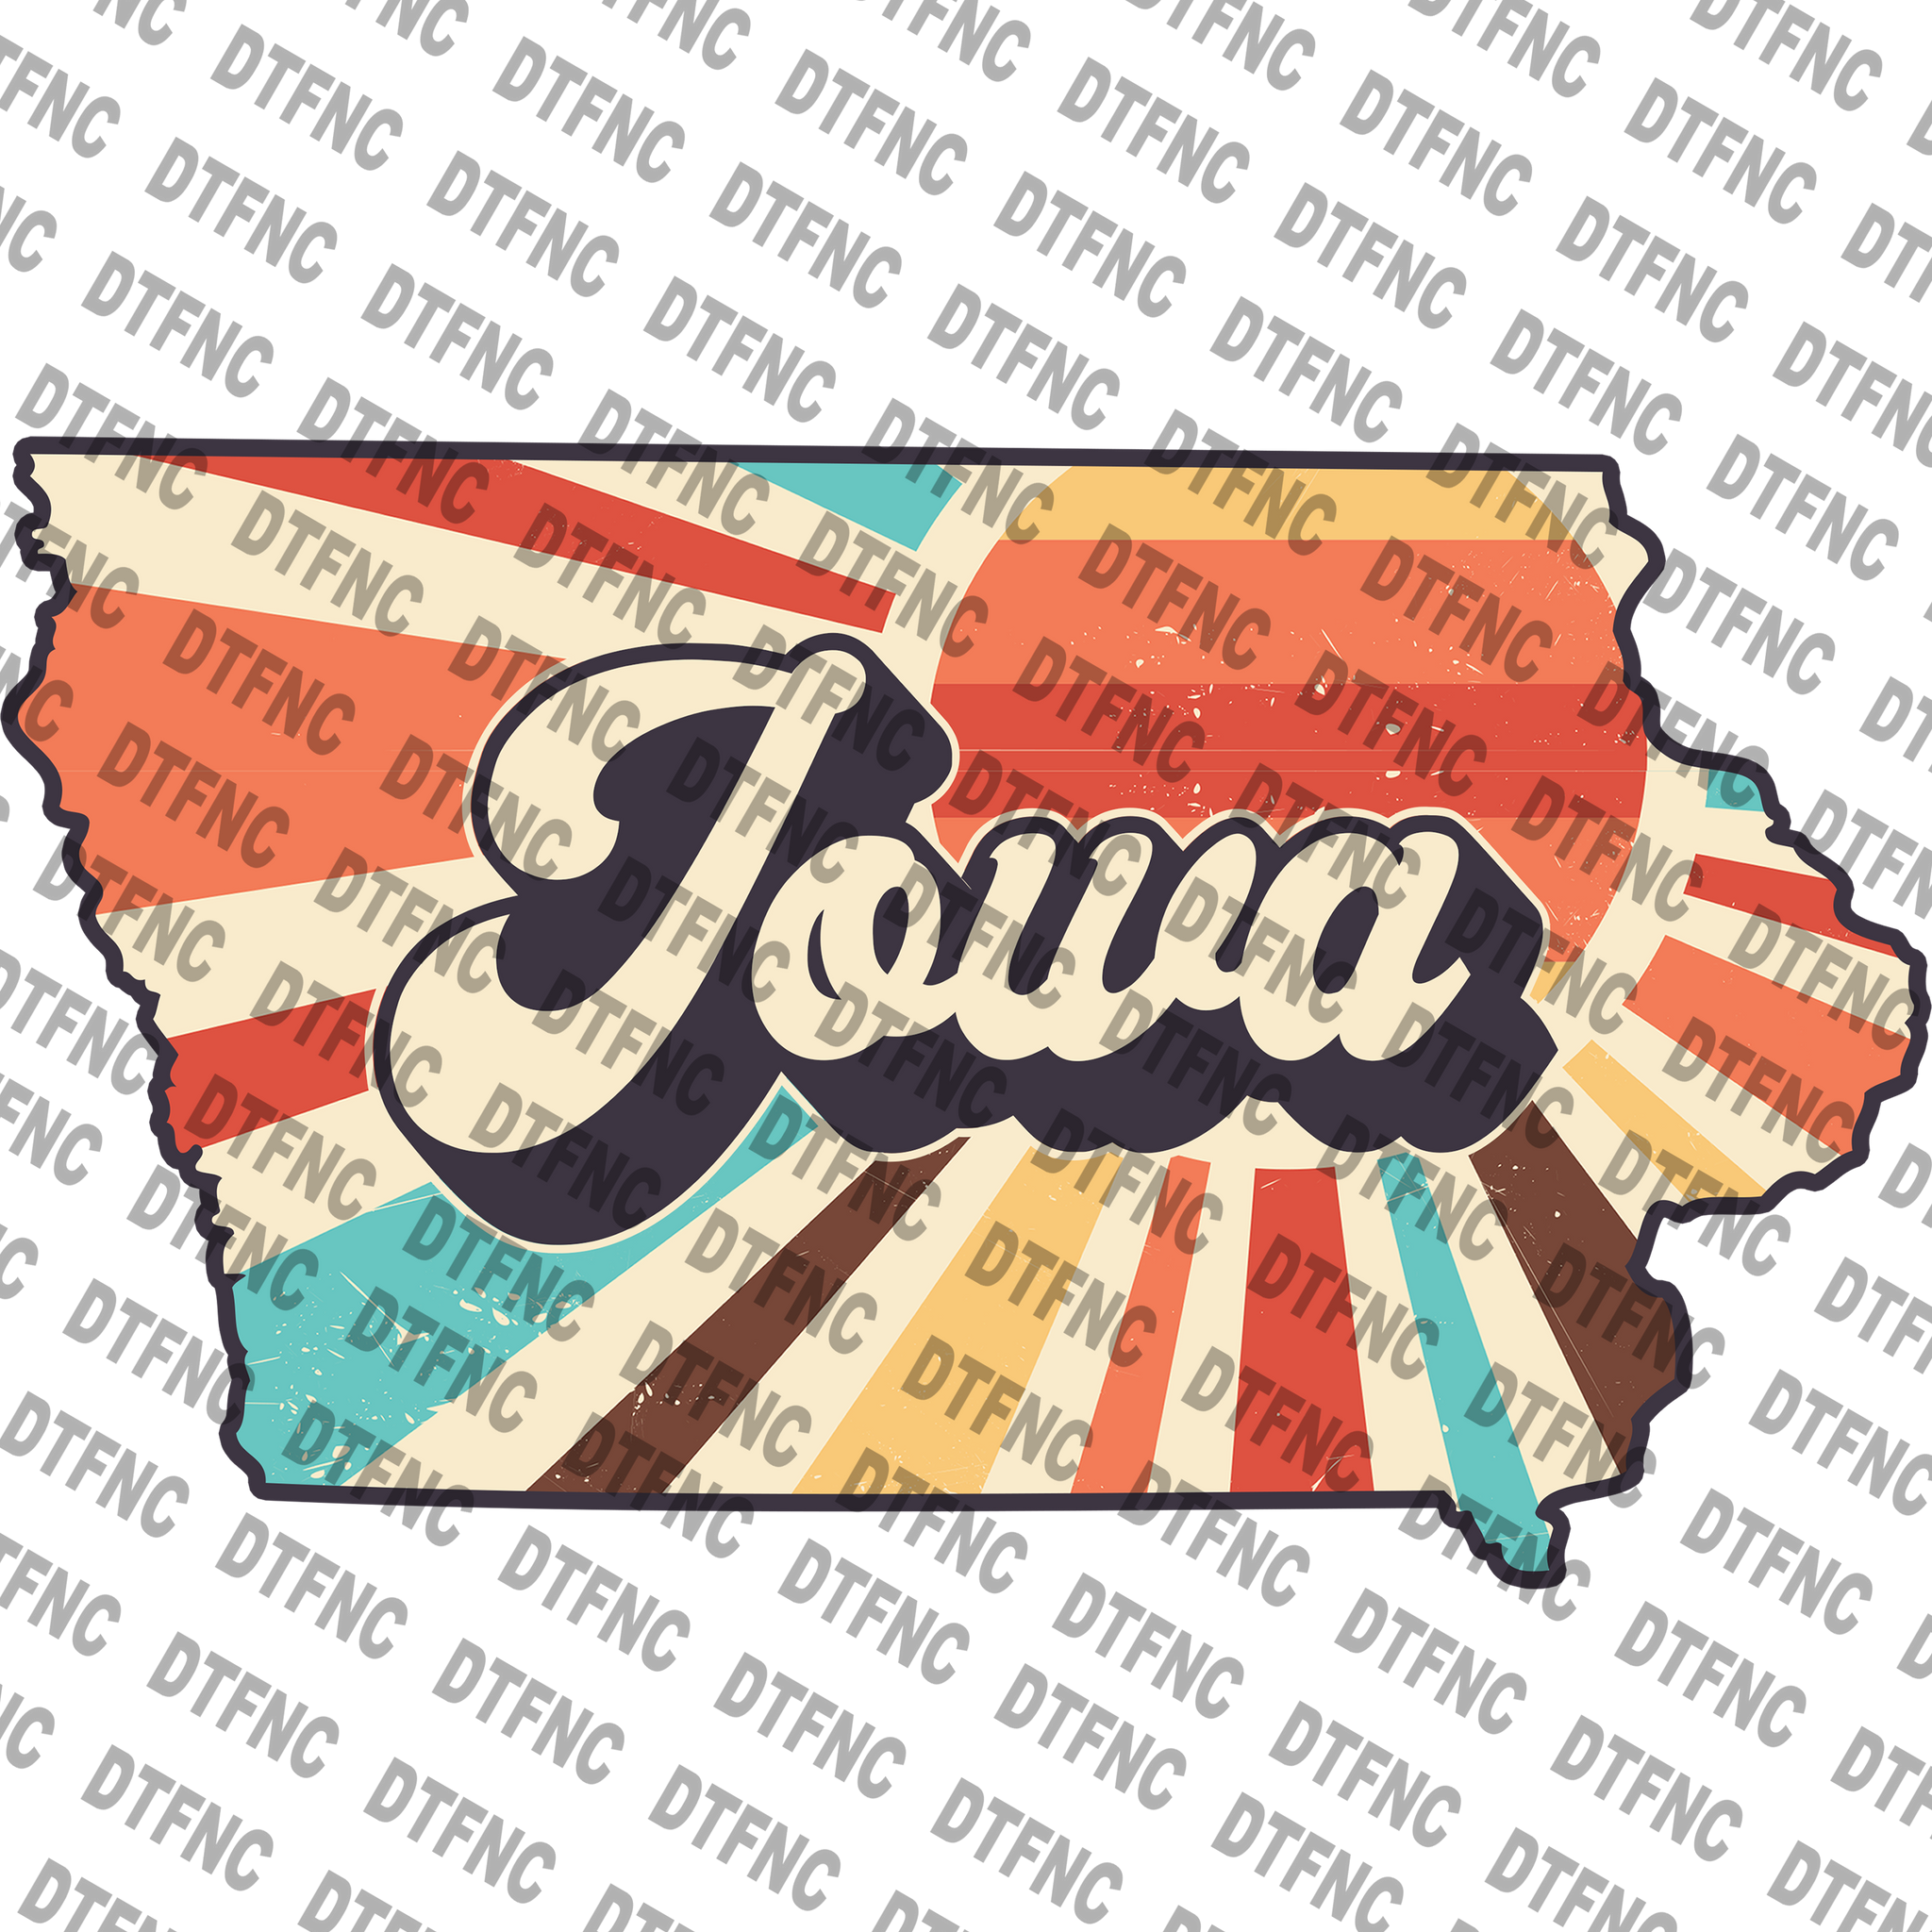 State - Iowa